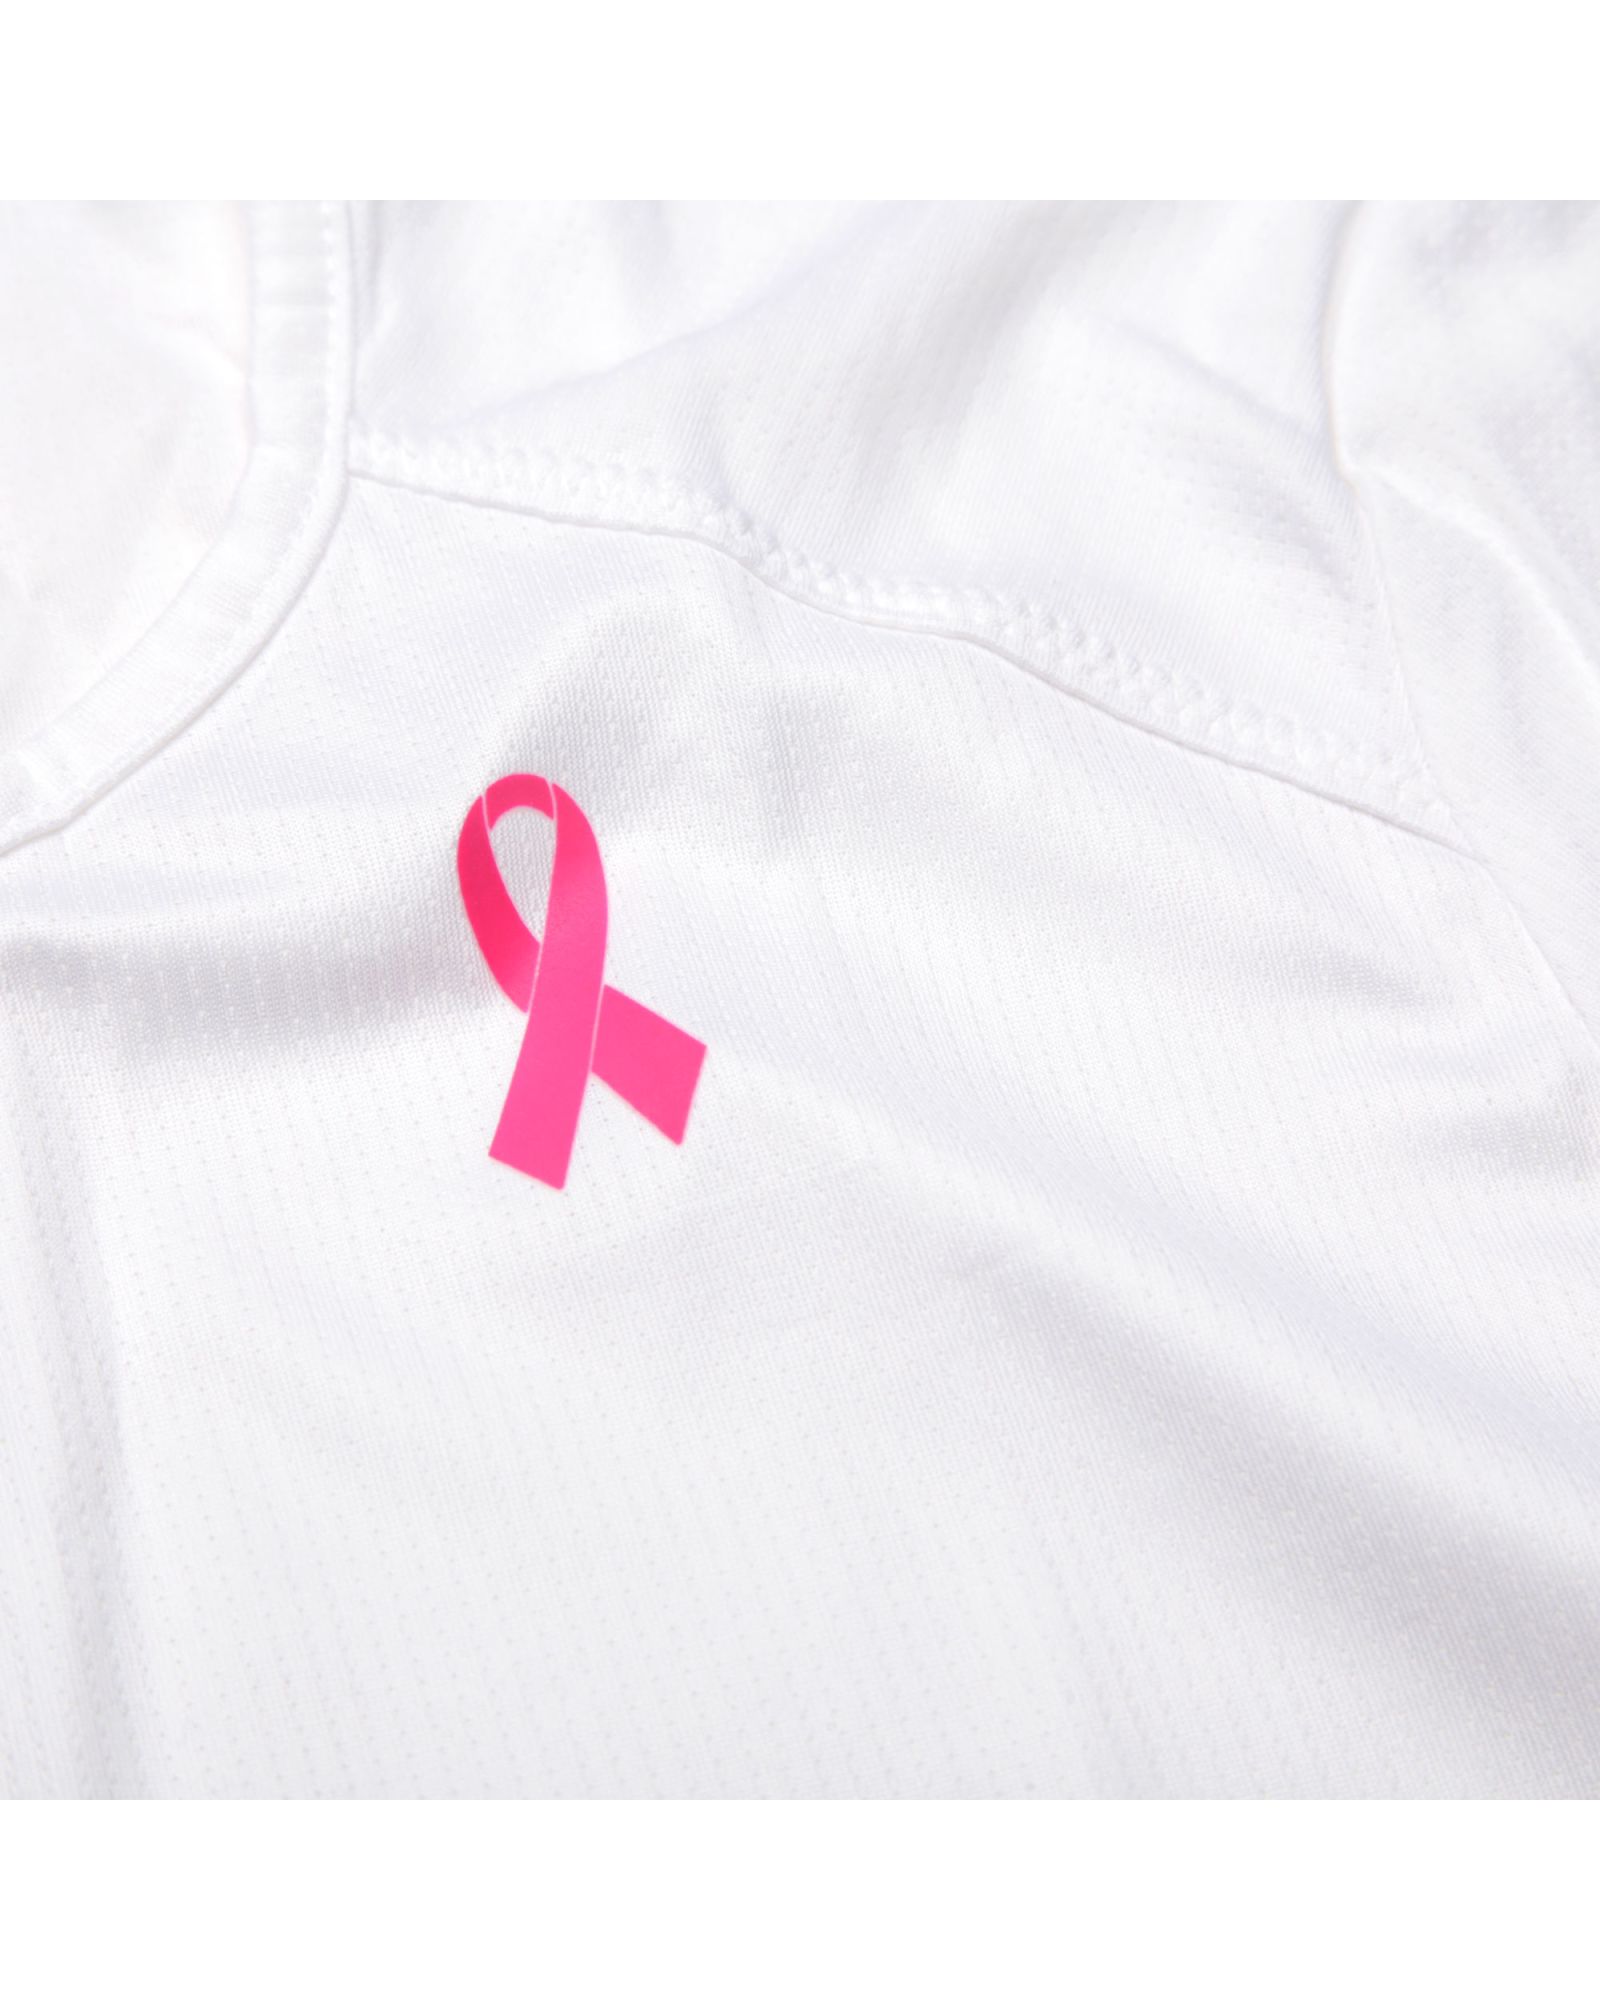 Camiseta de Running Response AKTIV Mujer Blanco Rosa - Fútbol Factory